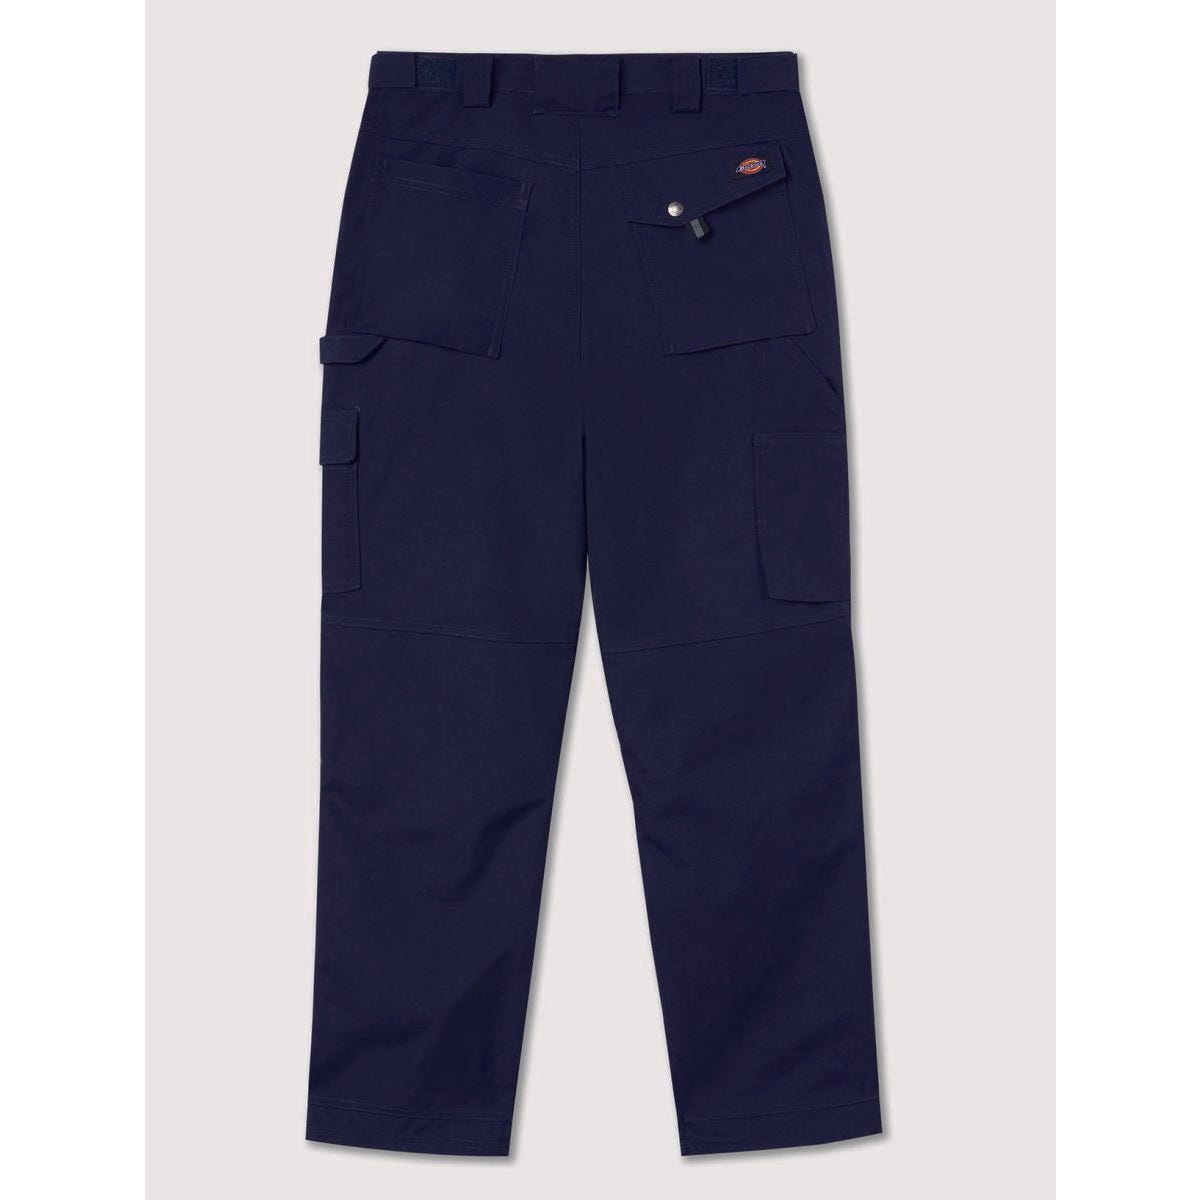 Pantalon Eisenhower multi-poches Bleu marine - Dickies - Taille 42 7